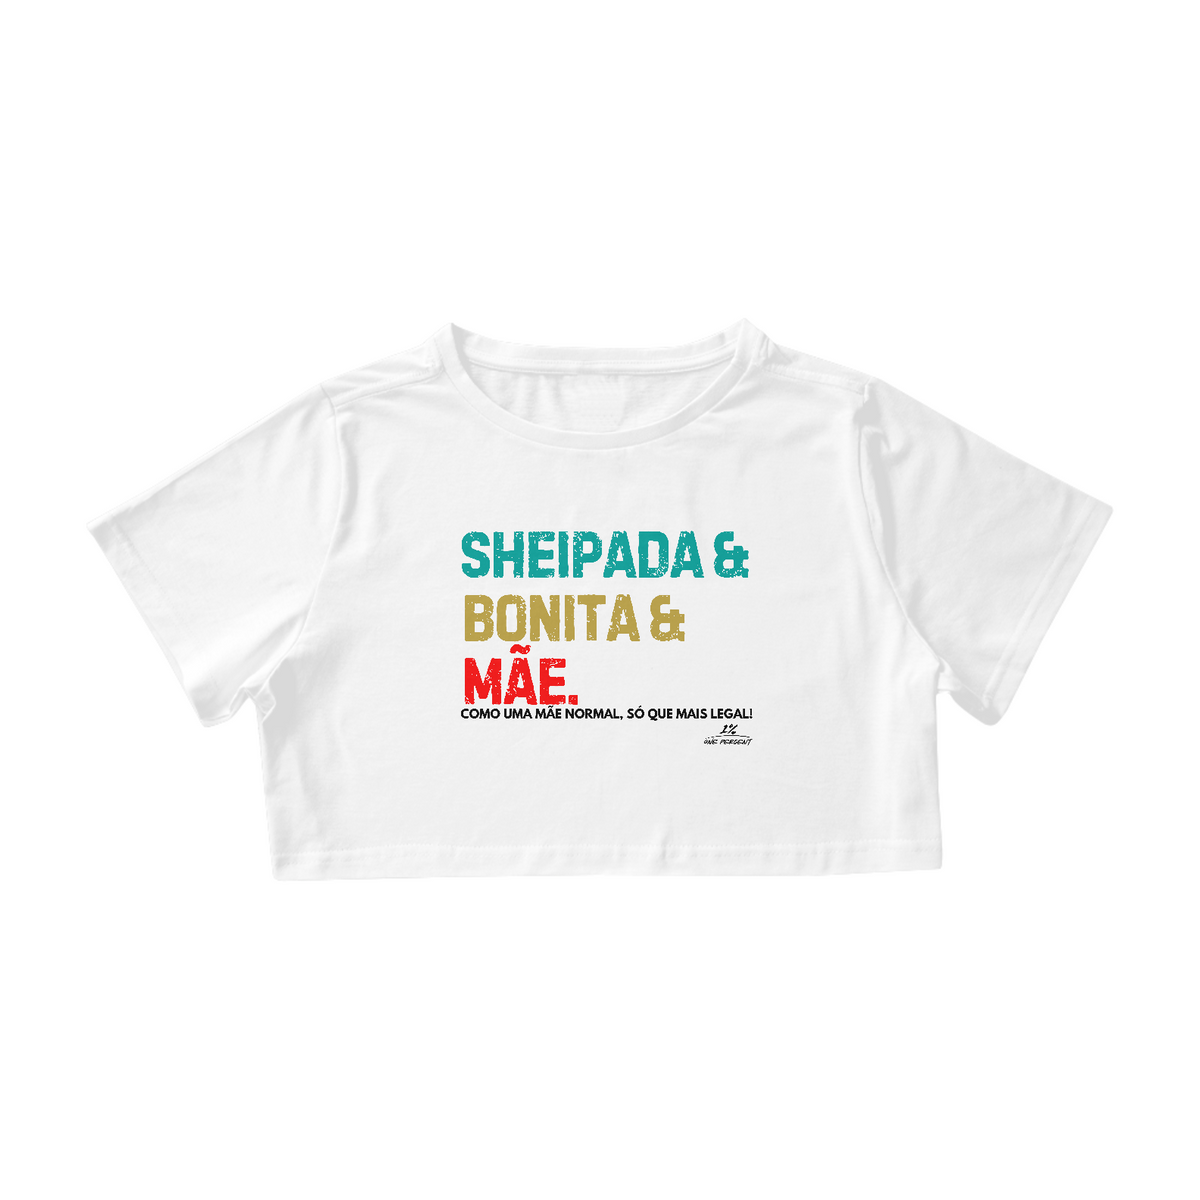 Nome do produto: SHEIPADA